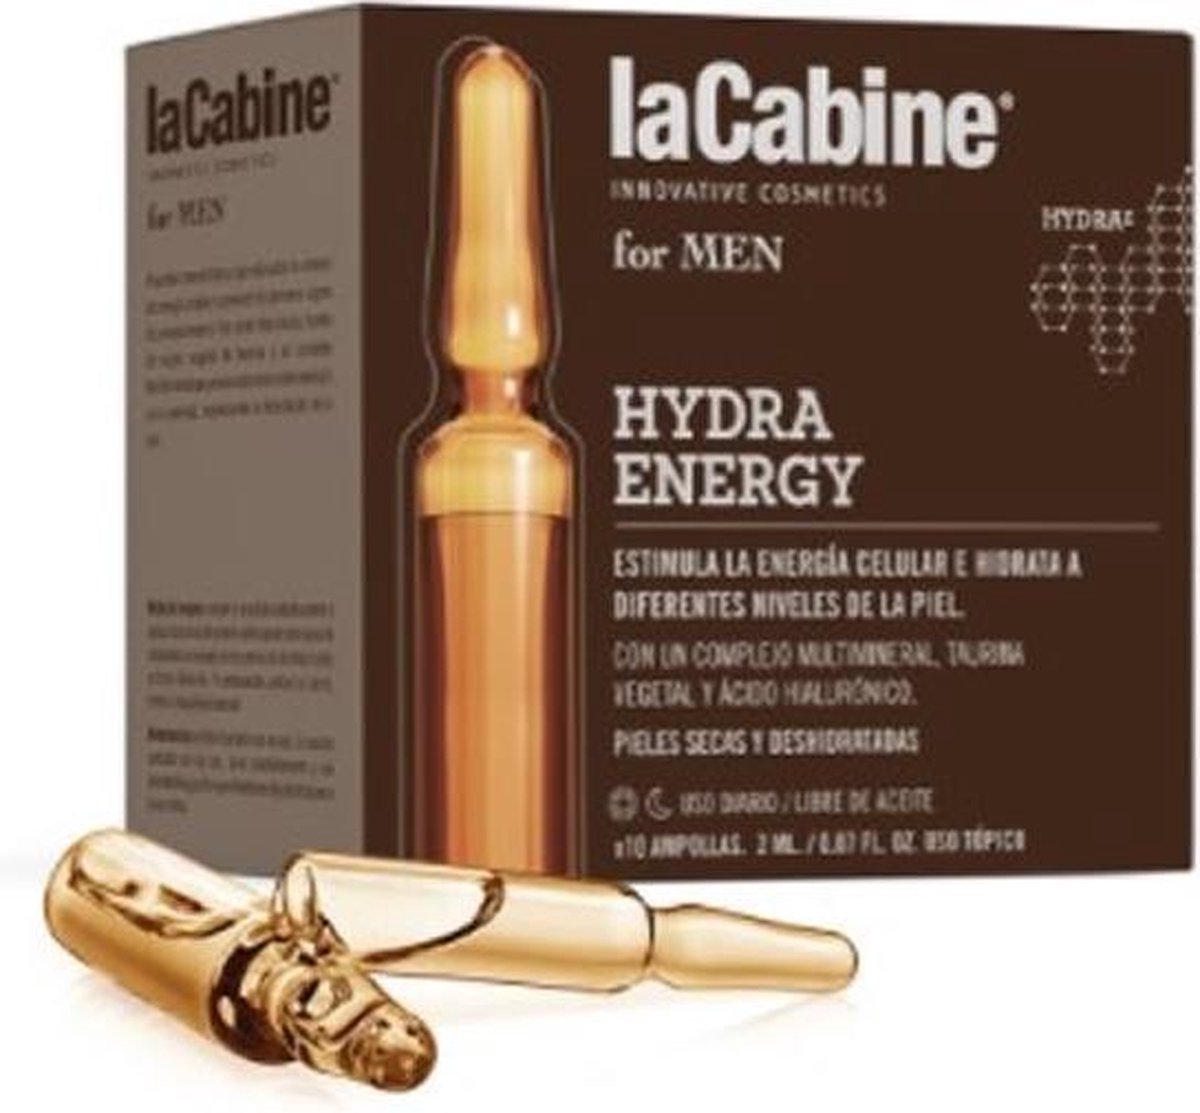 La Cabine For Men Hydra Energy Ampoules 10x2ml